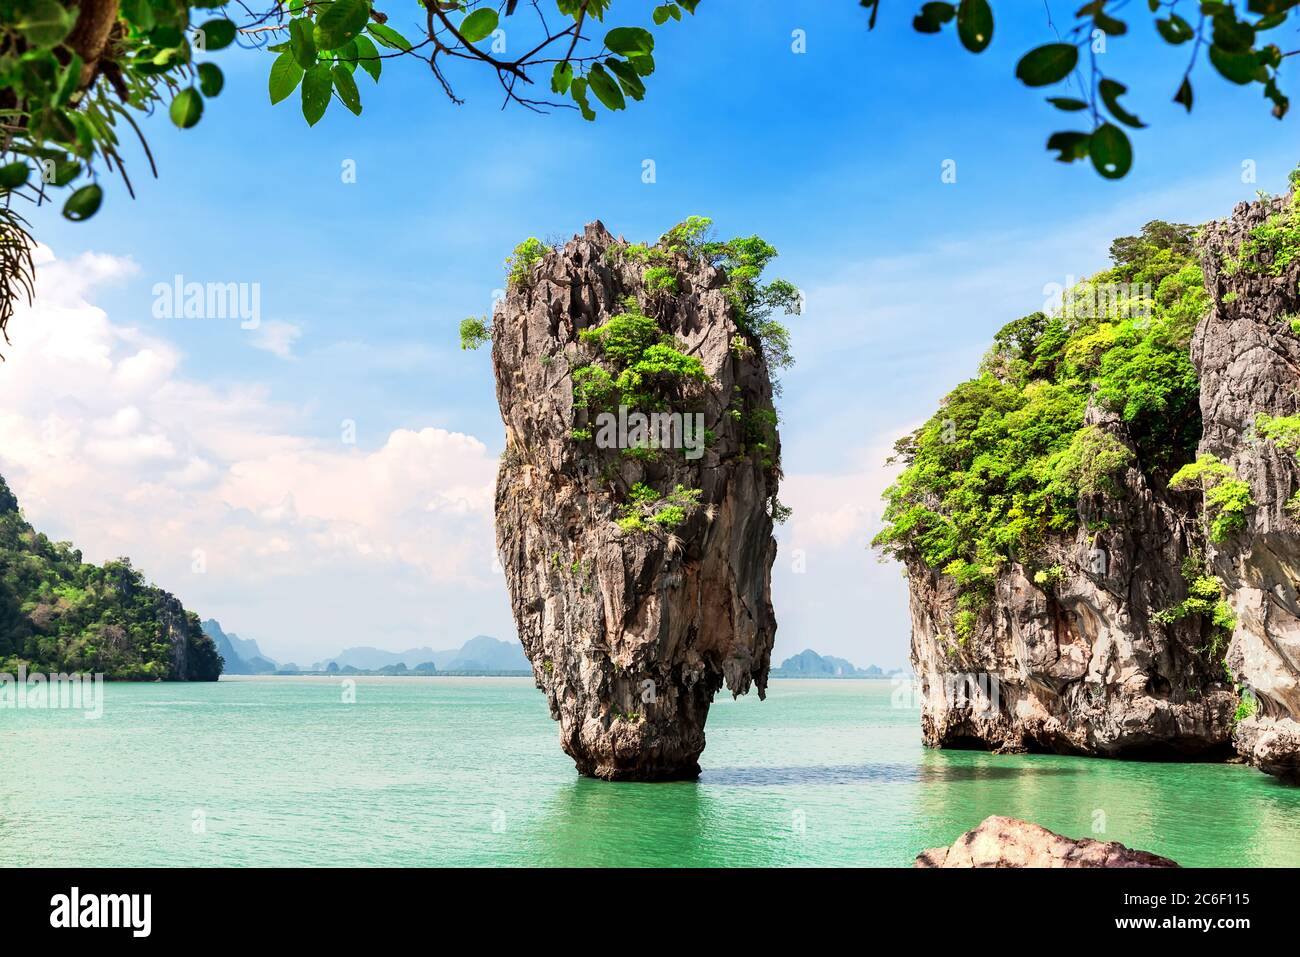 La famosa isla James Bond cerca de Phuket en Tailandia. Foto de viaje de la isla James Bond en la bahía Phang Nga. Lugar famoso tailandés. Foto de stock